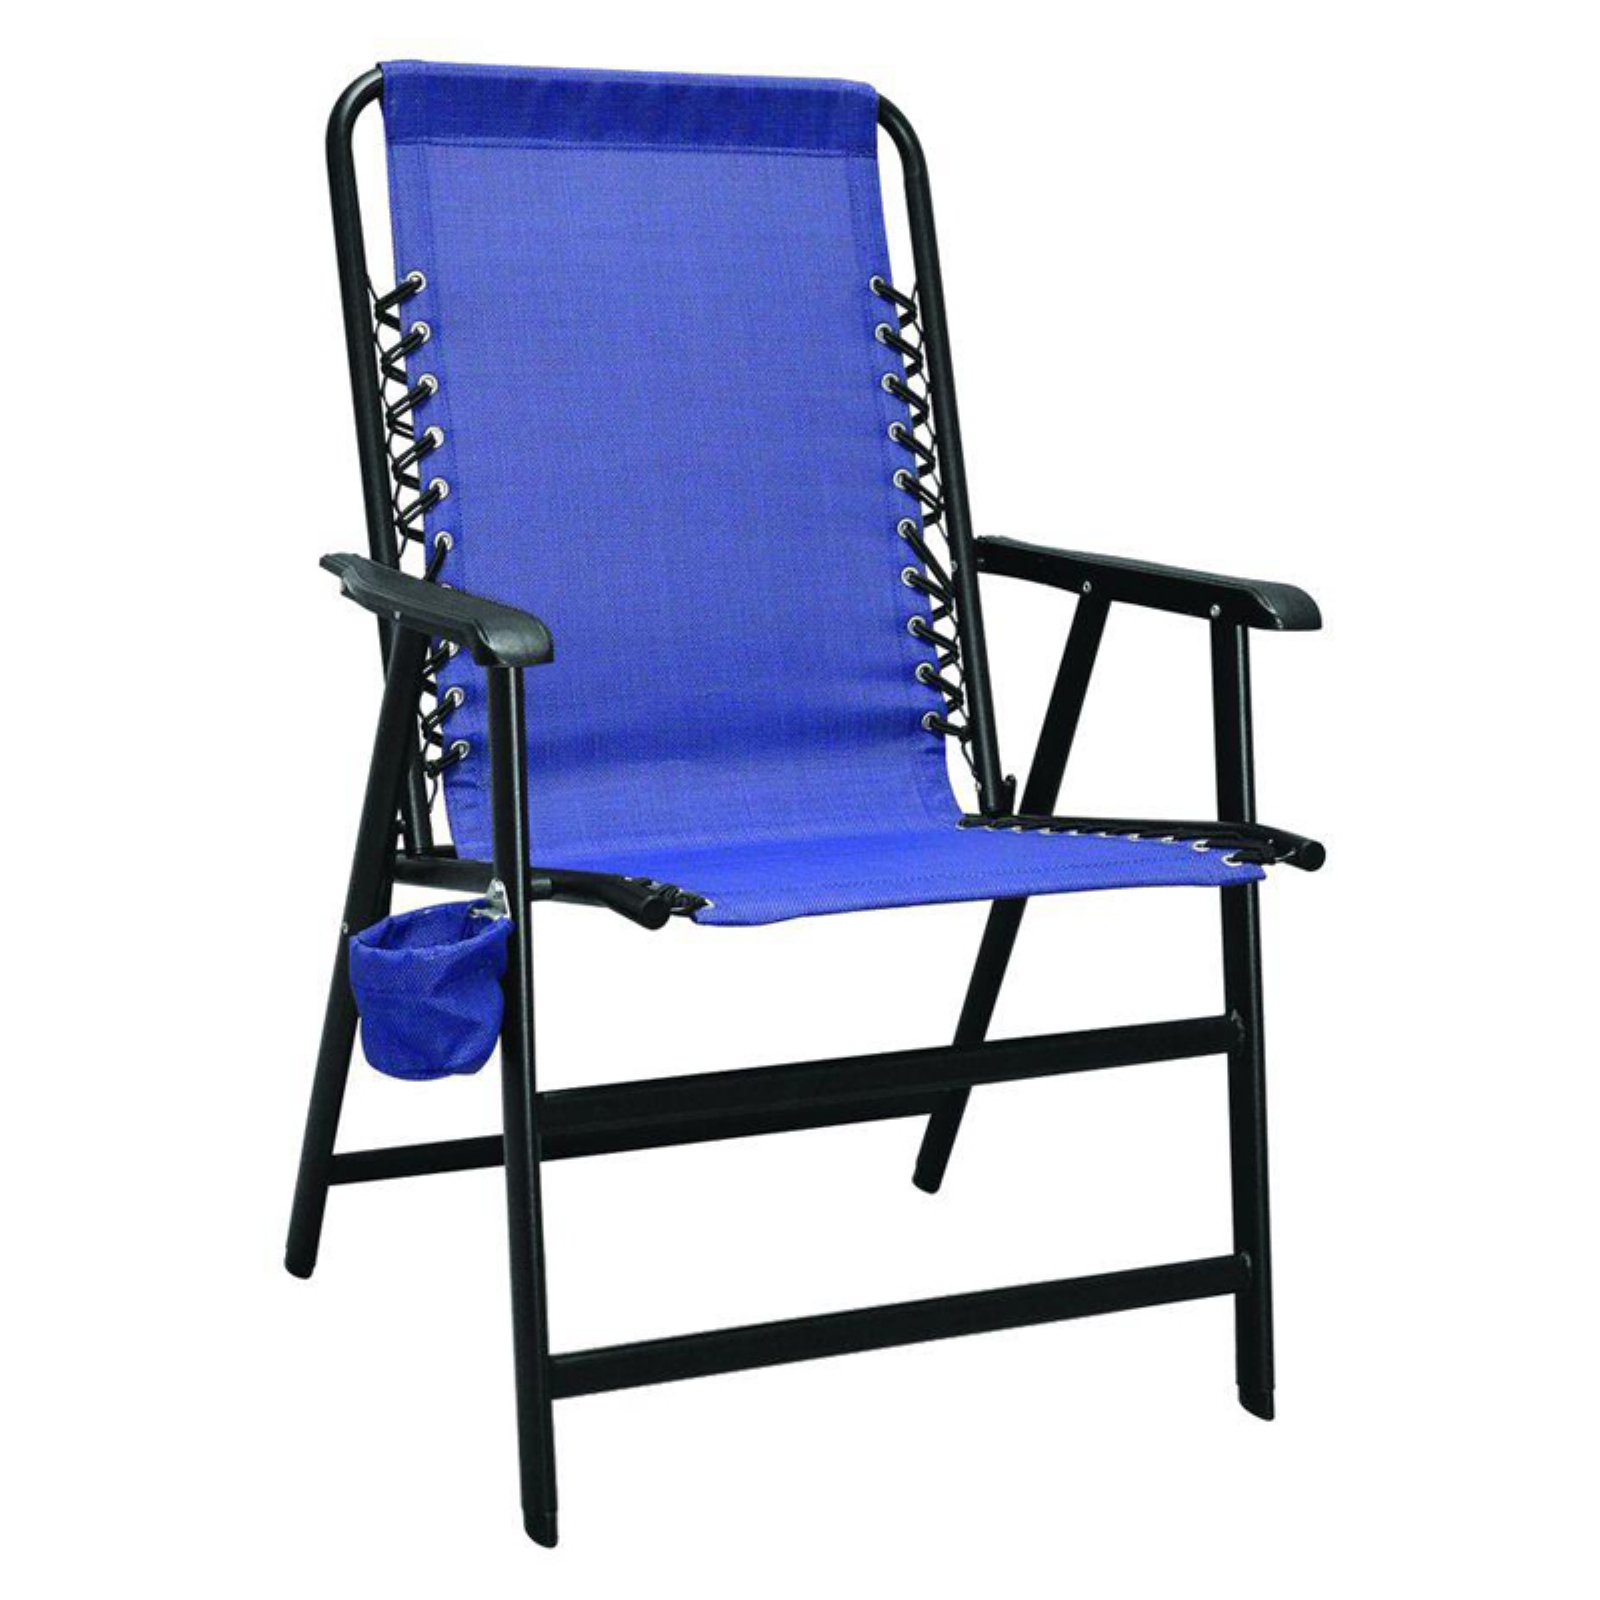 Caravan Sports XL Suspension Chair, Blue - image 1 of 5